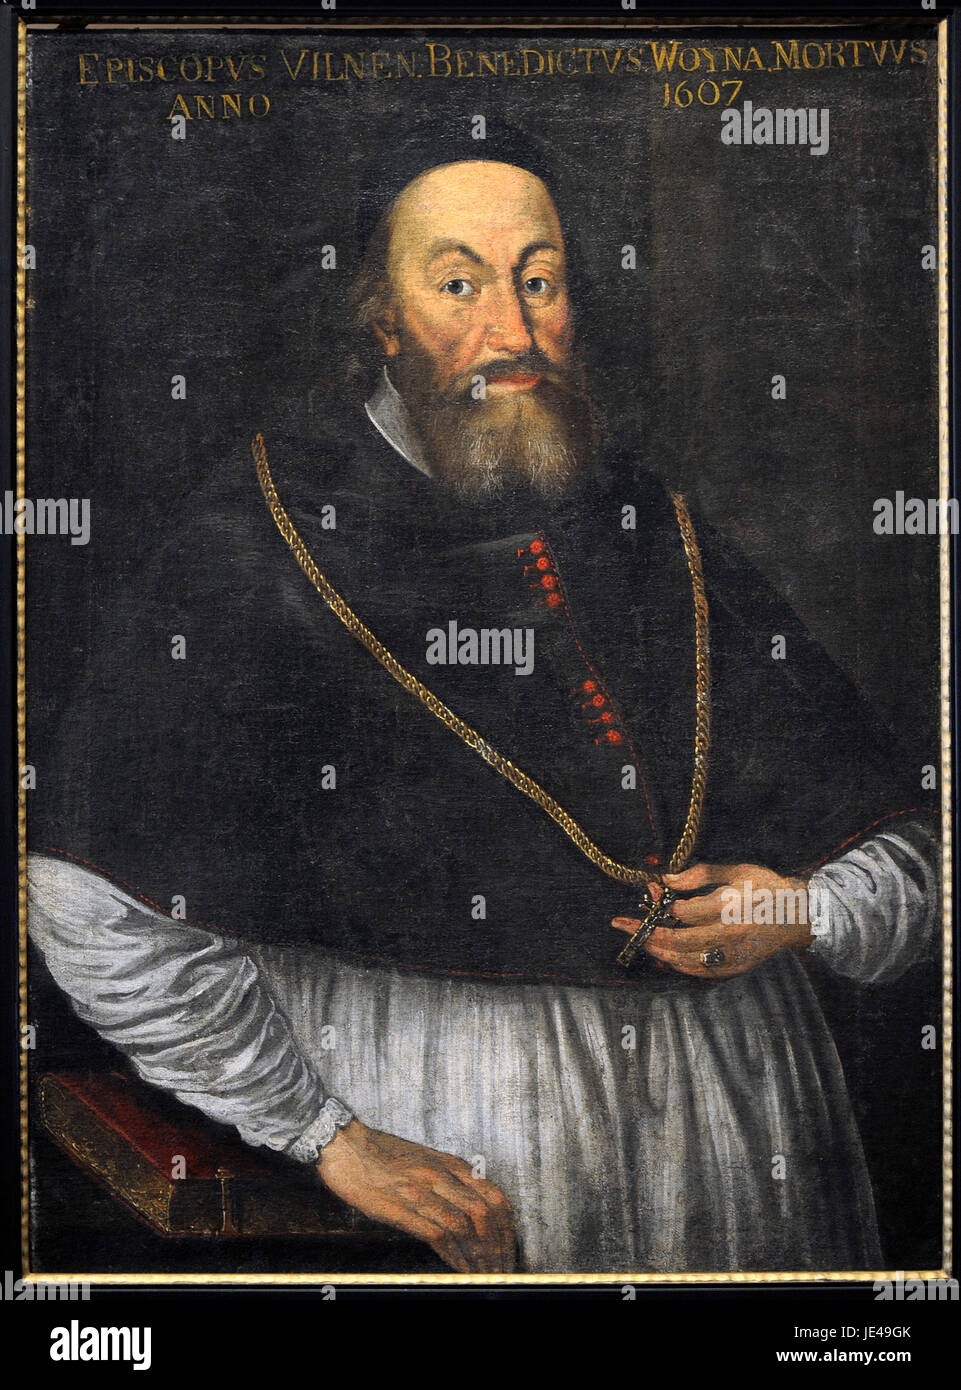 Benedykt Wojna (1556-1615). Bishop of Vilnius. Portrait. Lithuanian artish, 17th century. Vilnius Picture Gallery. Lithuania. Stock Photo